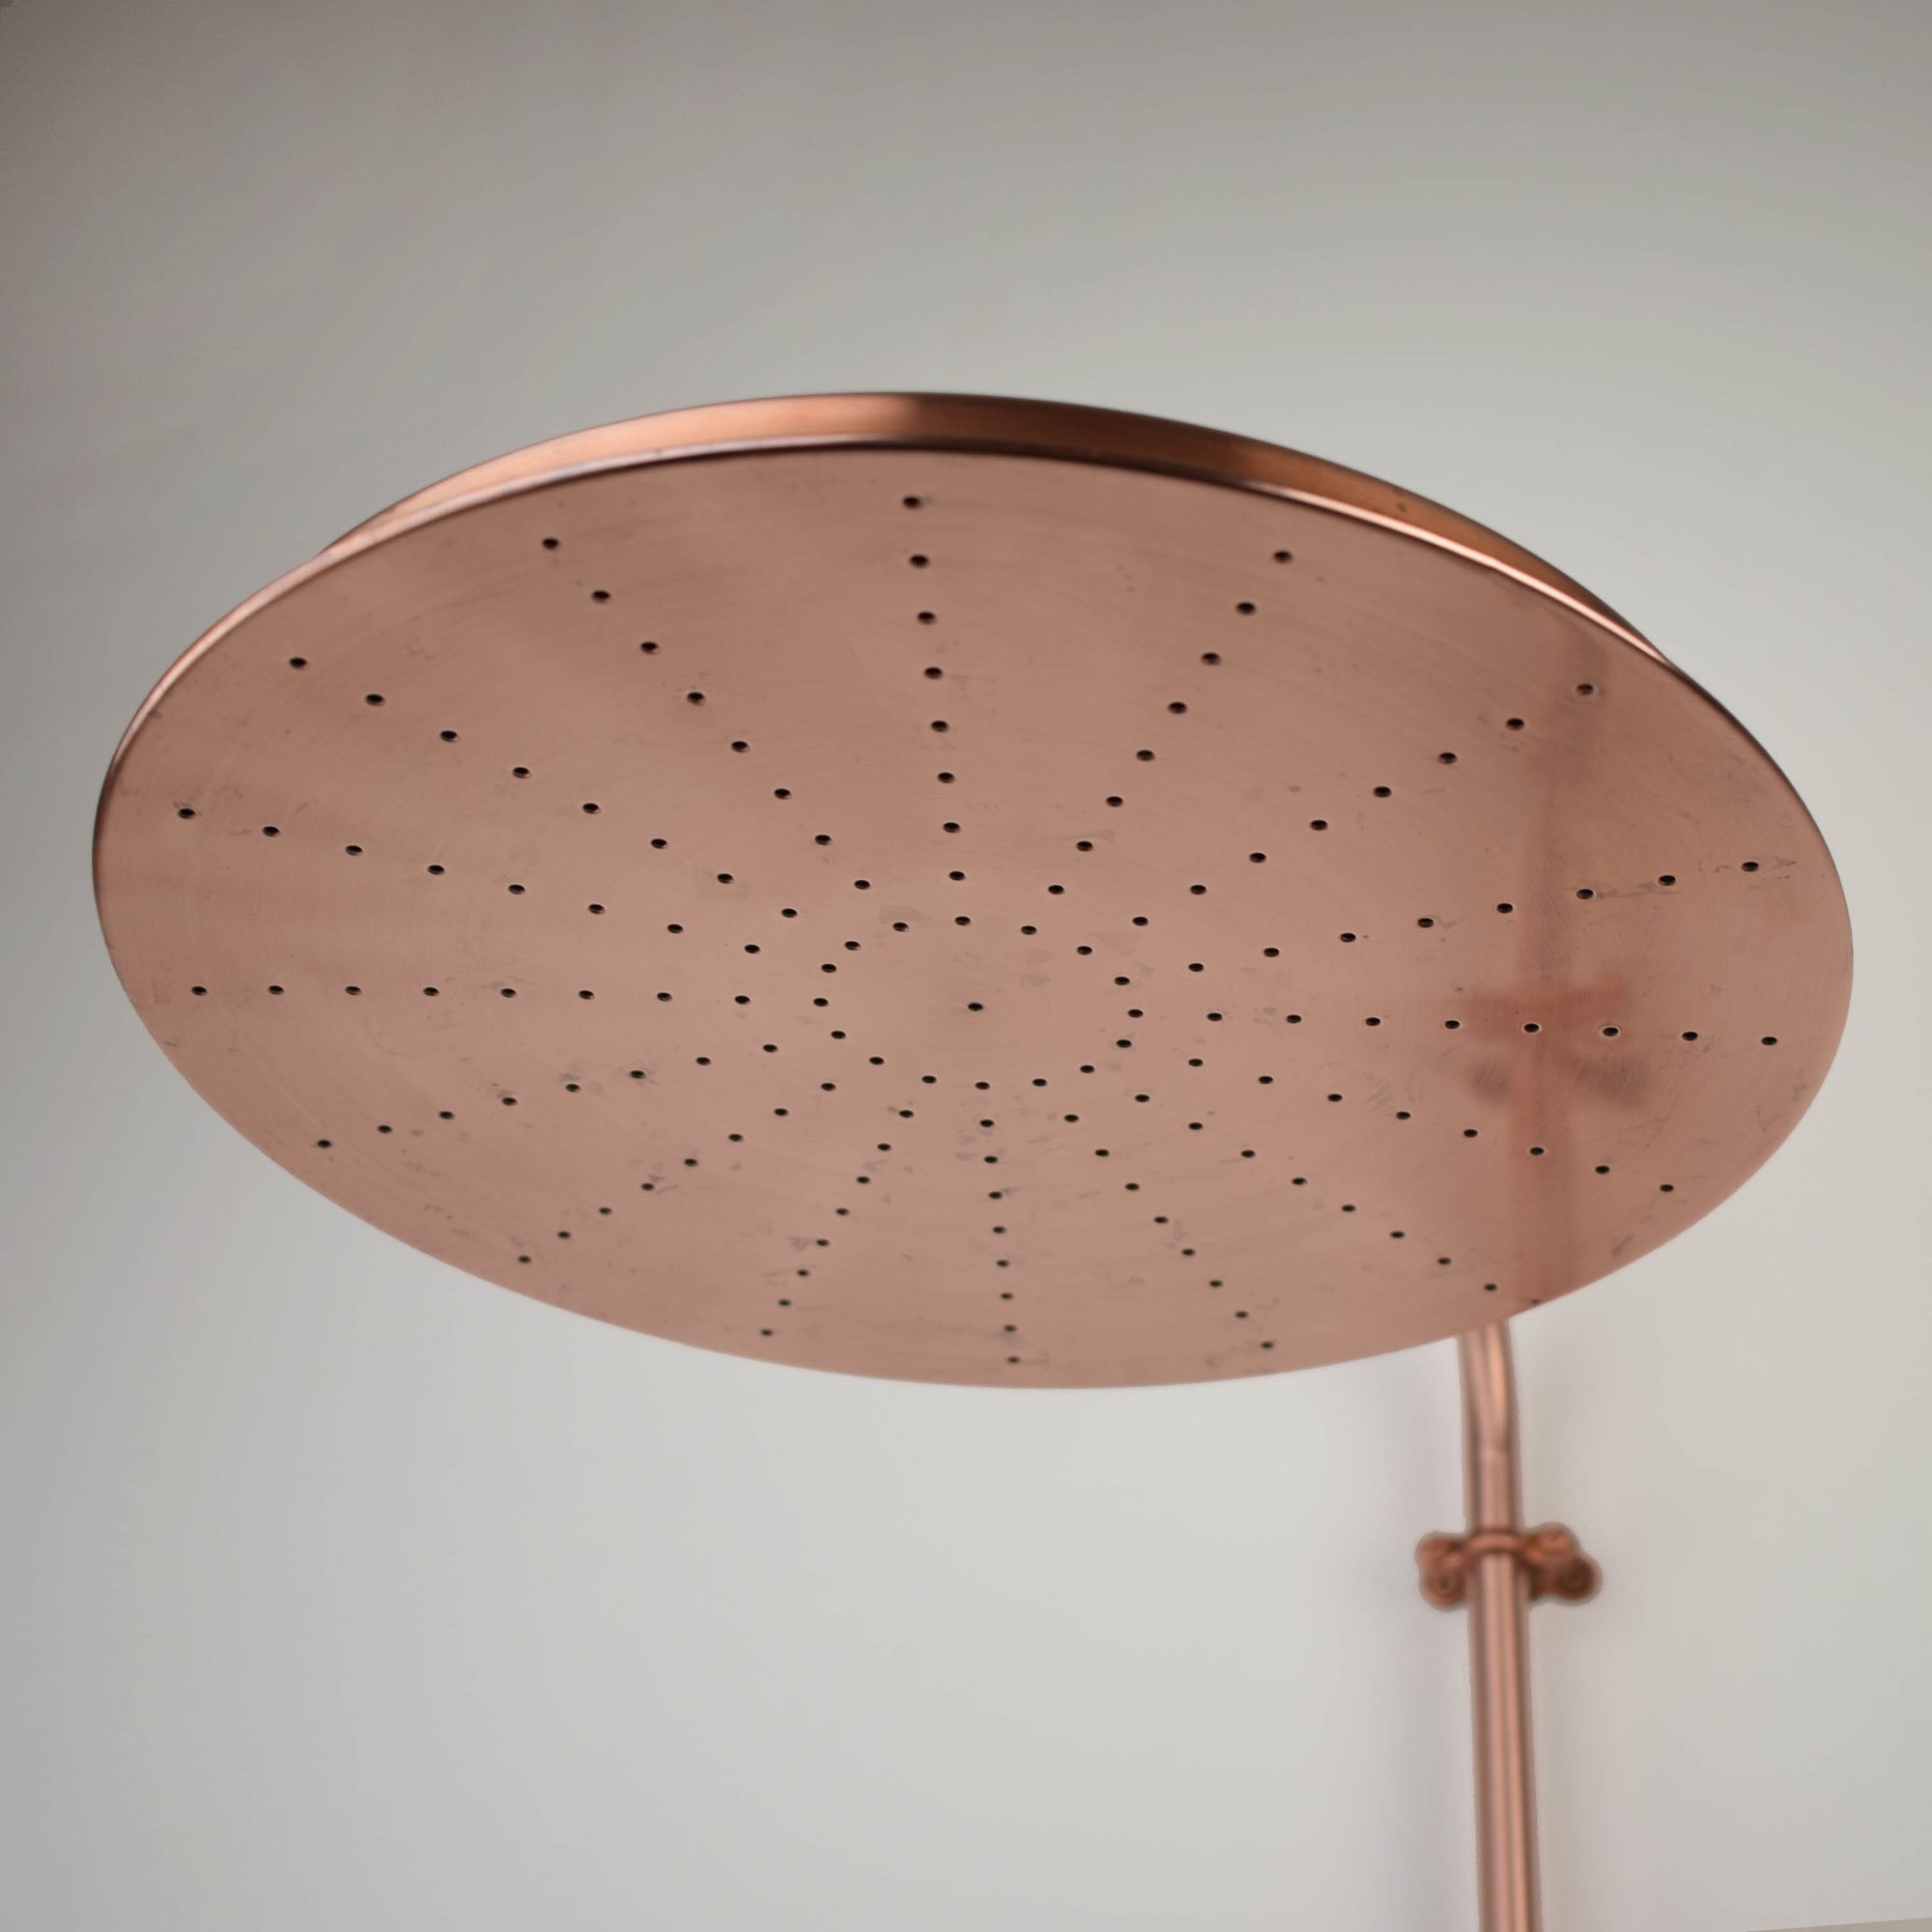 Copper Shower Head - Large Pan Head - Proper Copper Design